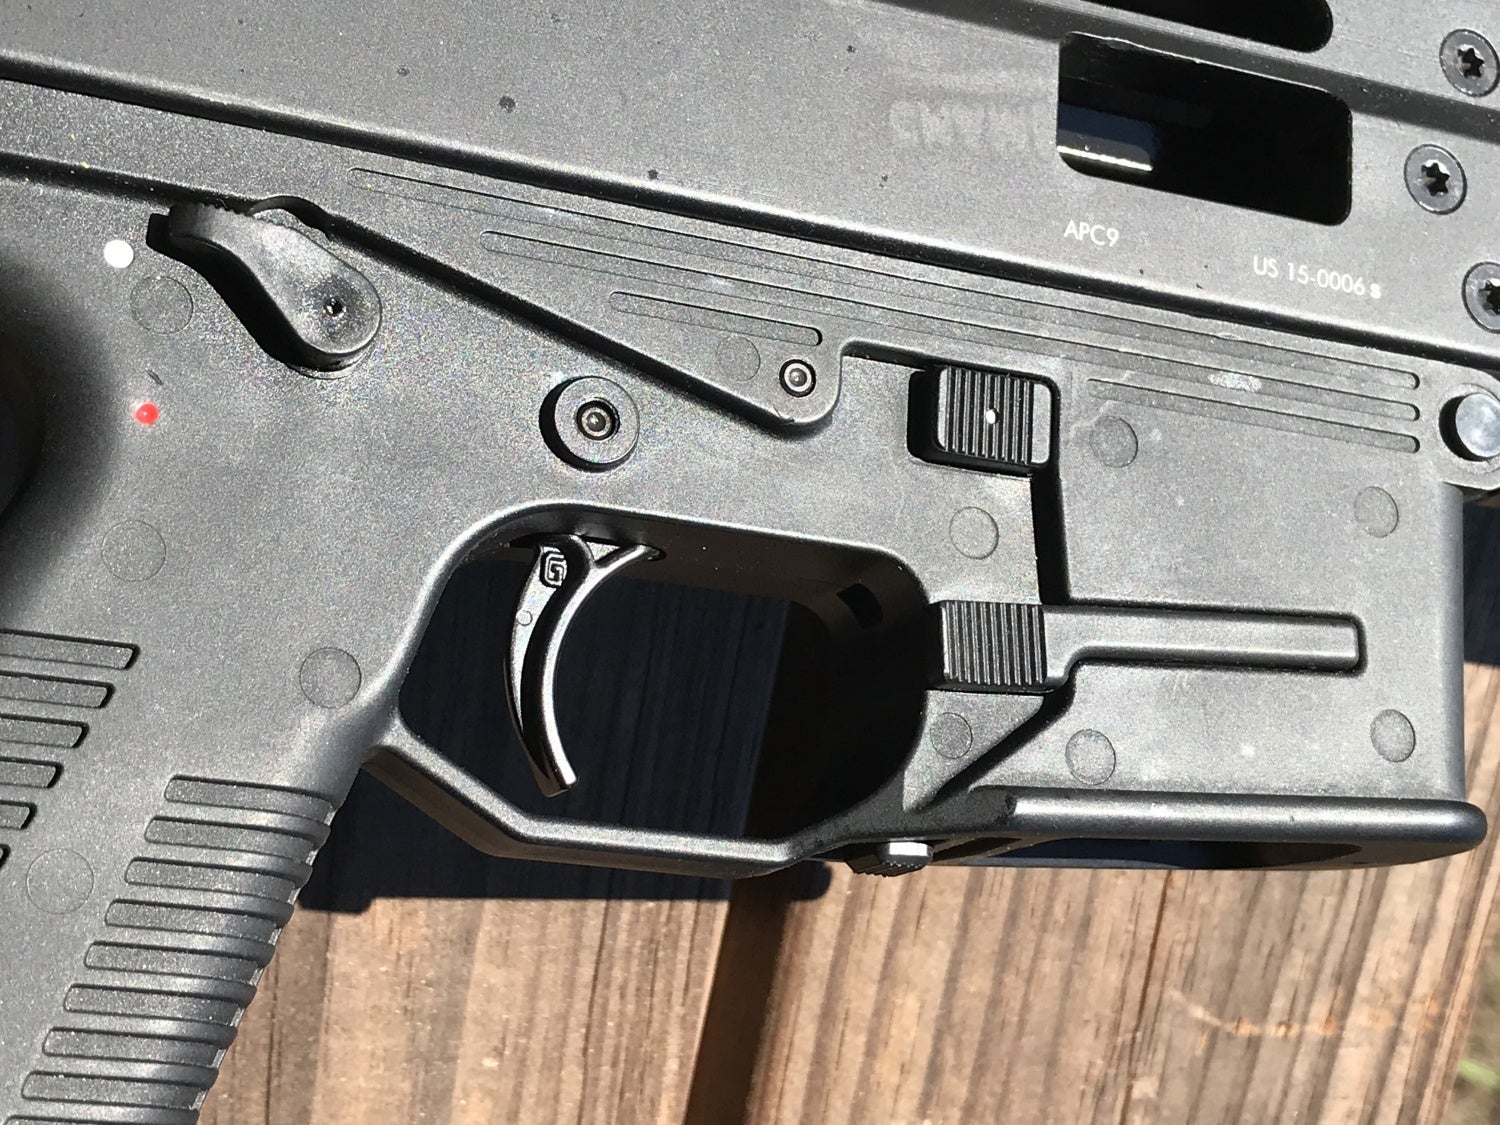 close up of the APC9 trigger